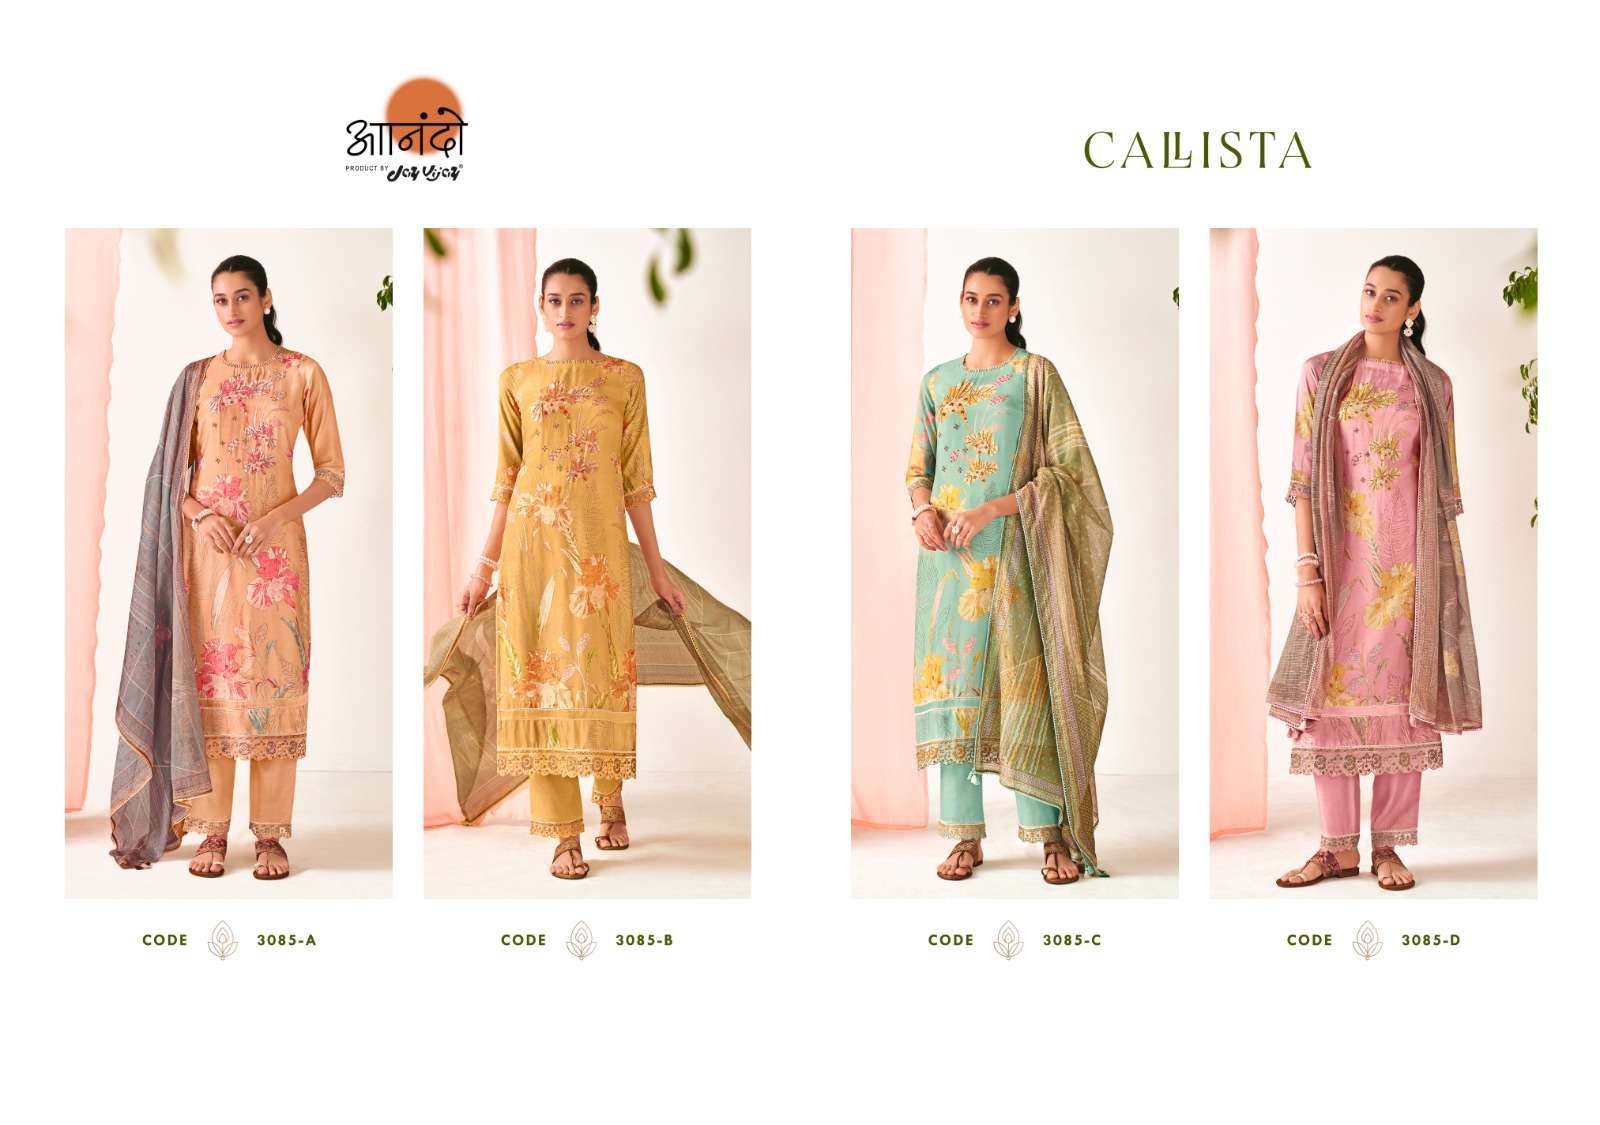 New Arrival Multi Color Cotton Satin Digital Printed Churidar Suit  LSTV117155